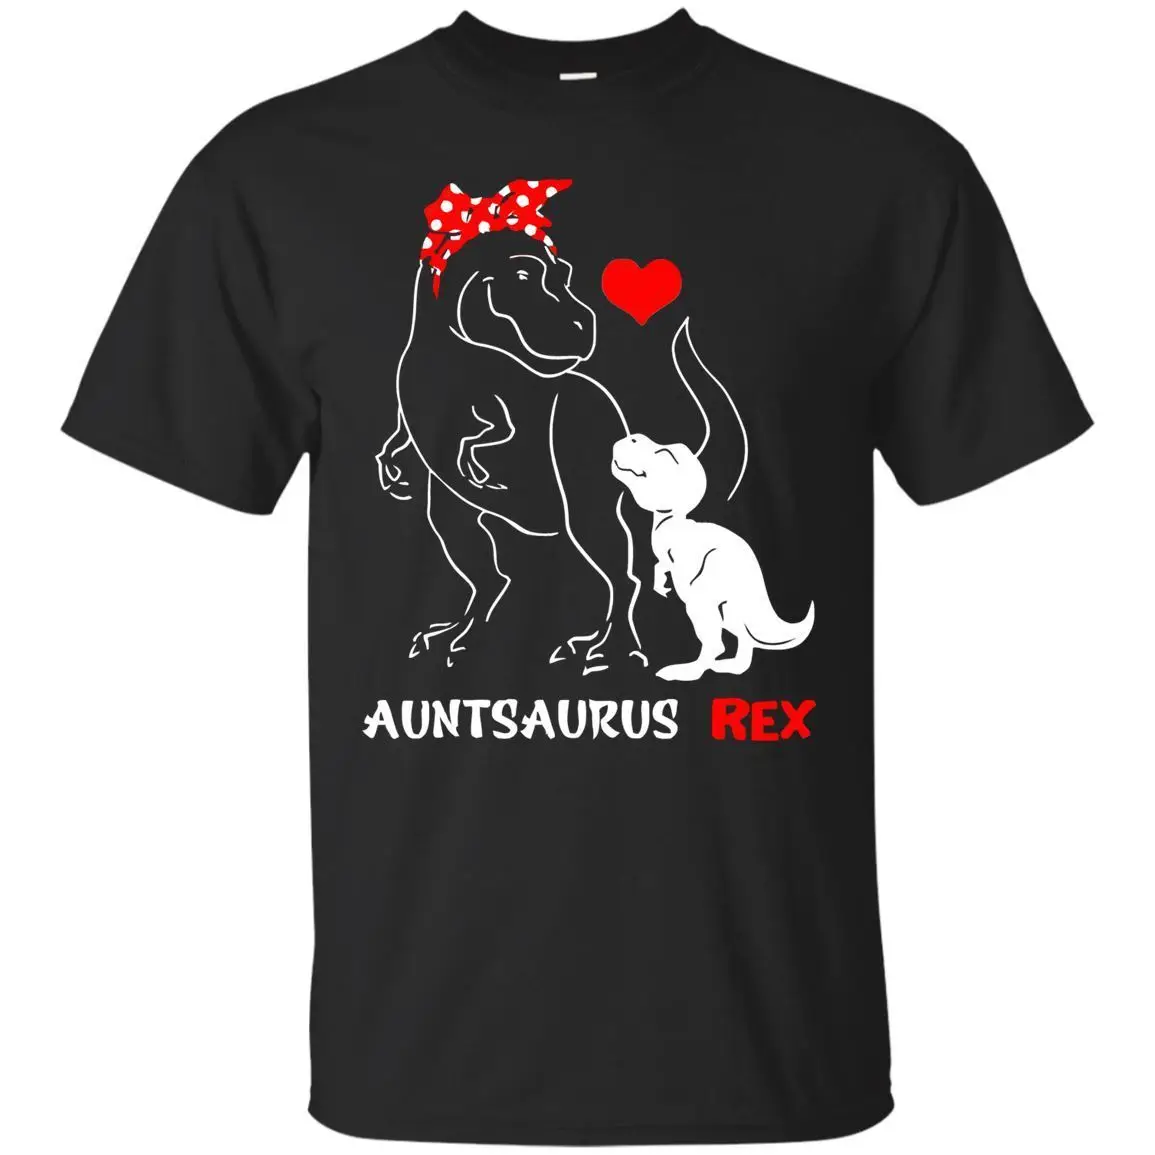 Auntsaurus Rex T-Shirt Funny Auntie Unisex Shirt Short Sleeve Cool Casual pride t shirt men Fashion tshirt |